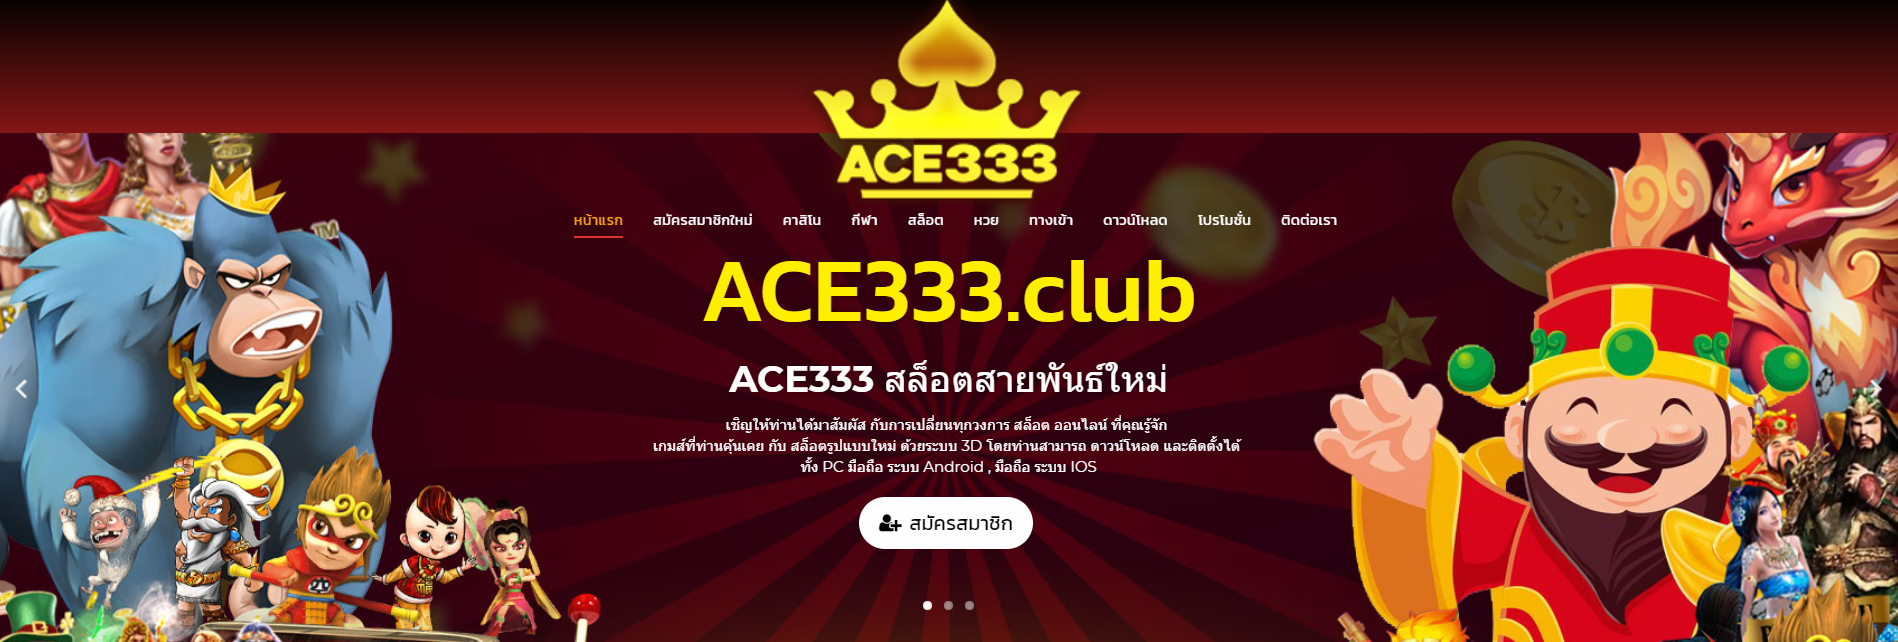 Ace333 ดีไหม